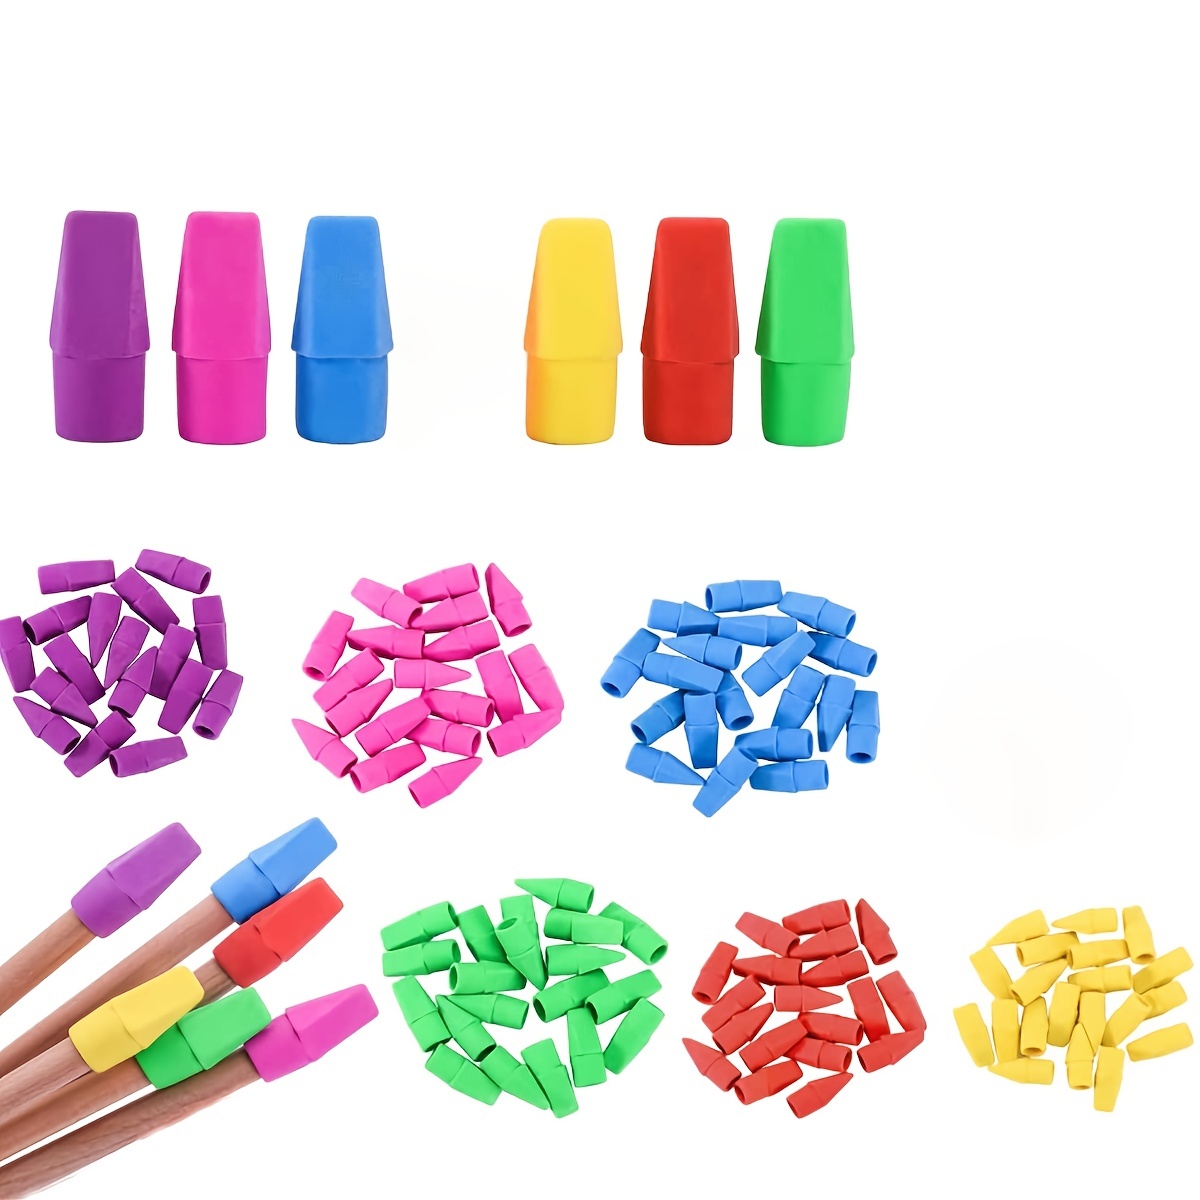 Pencil Cap Erasers